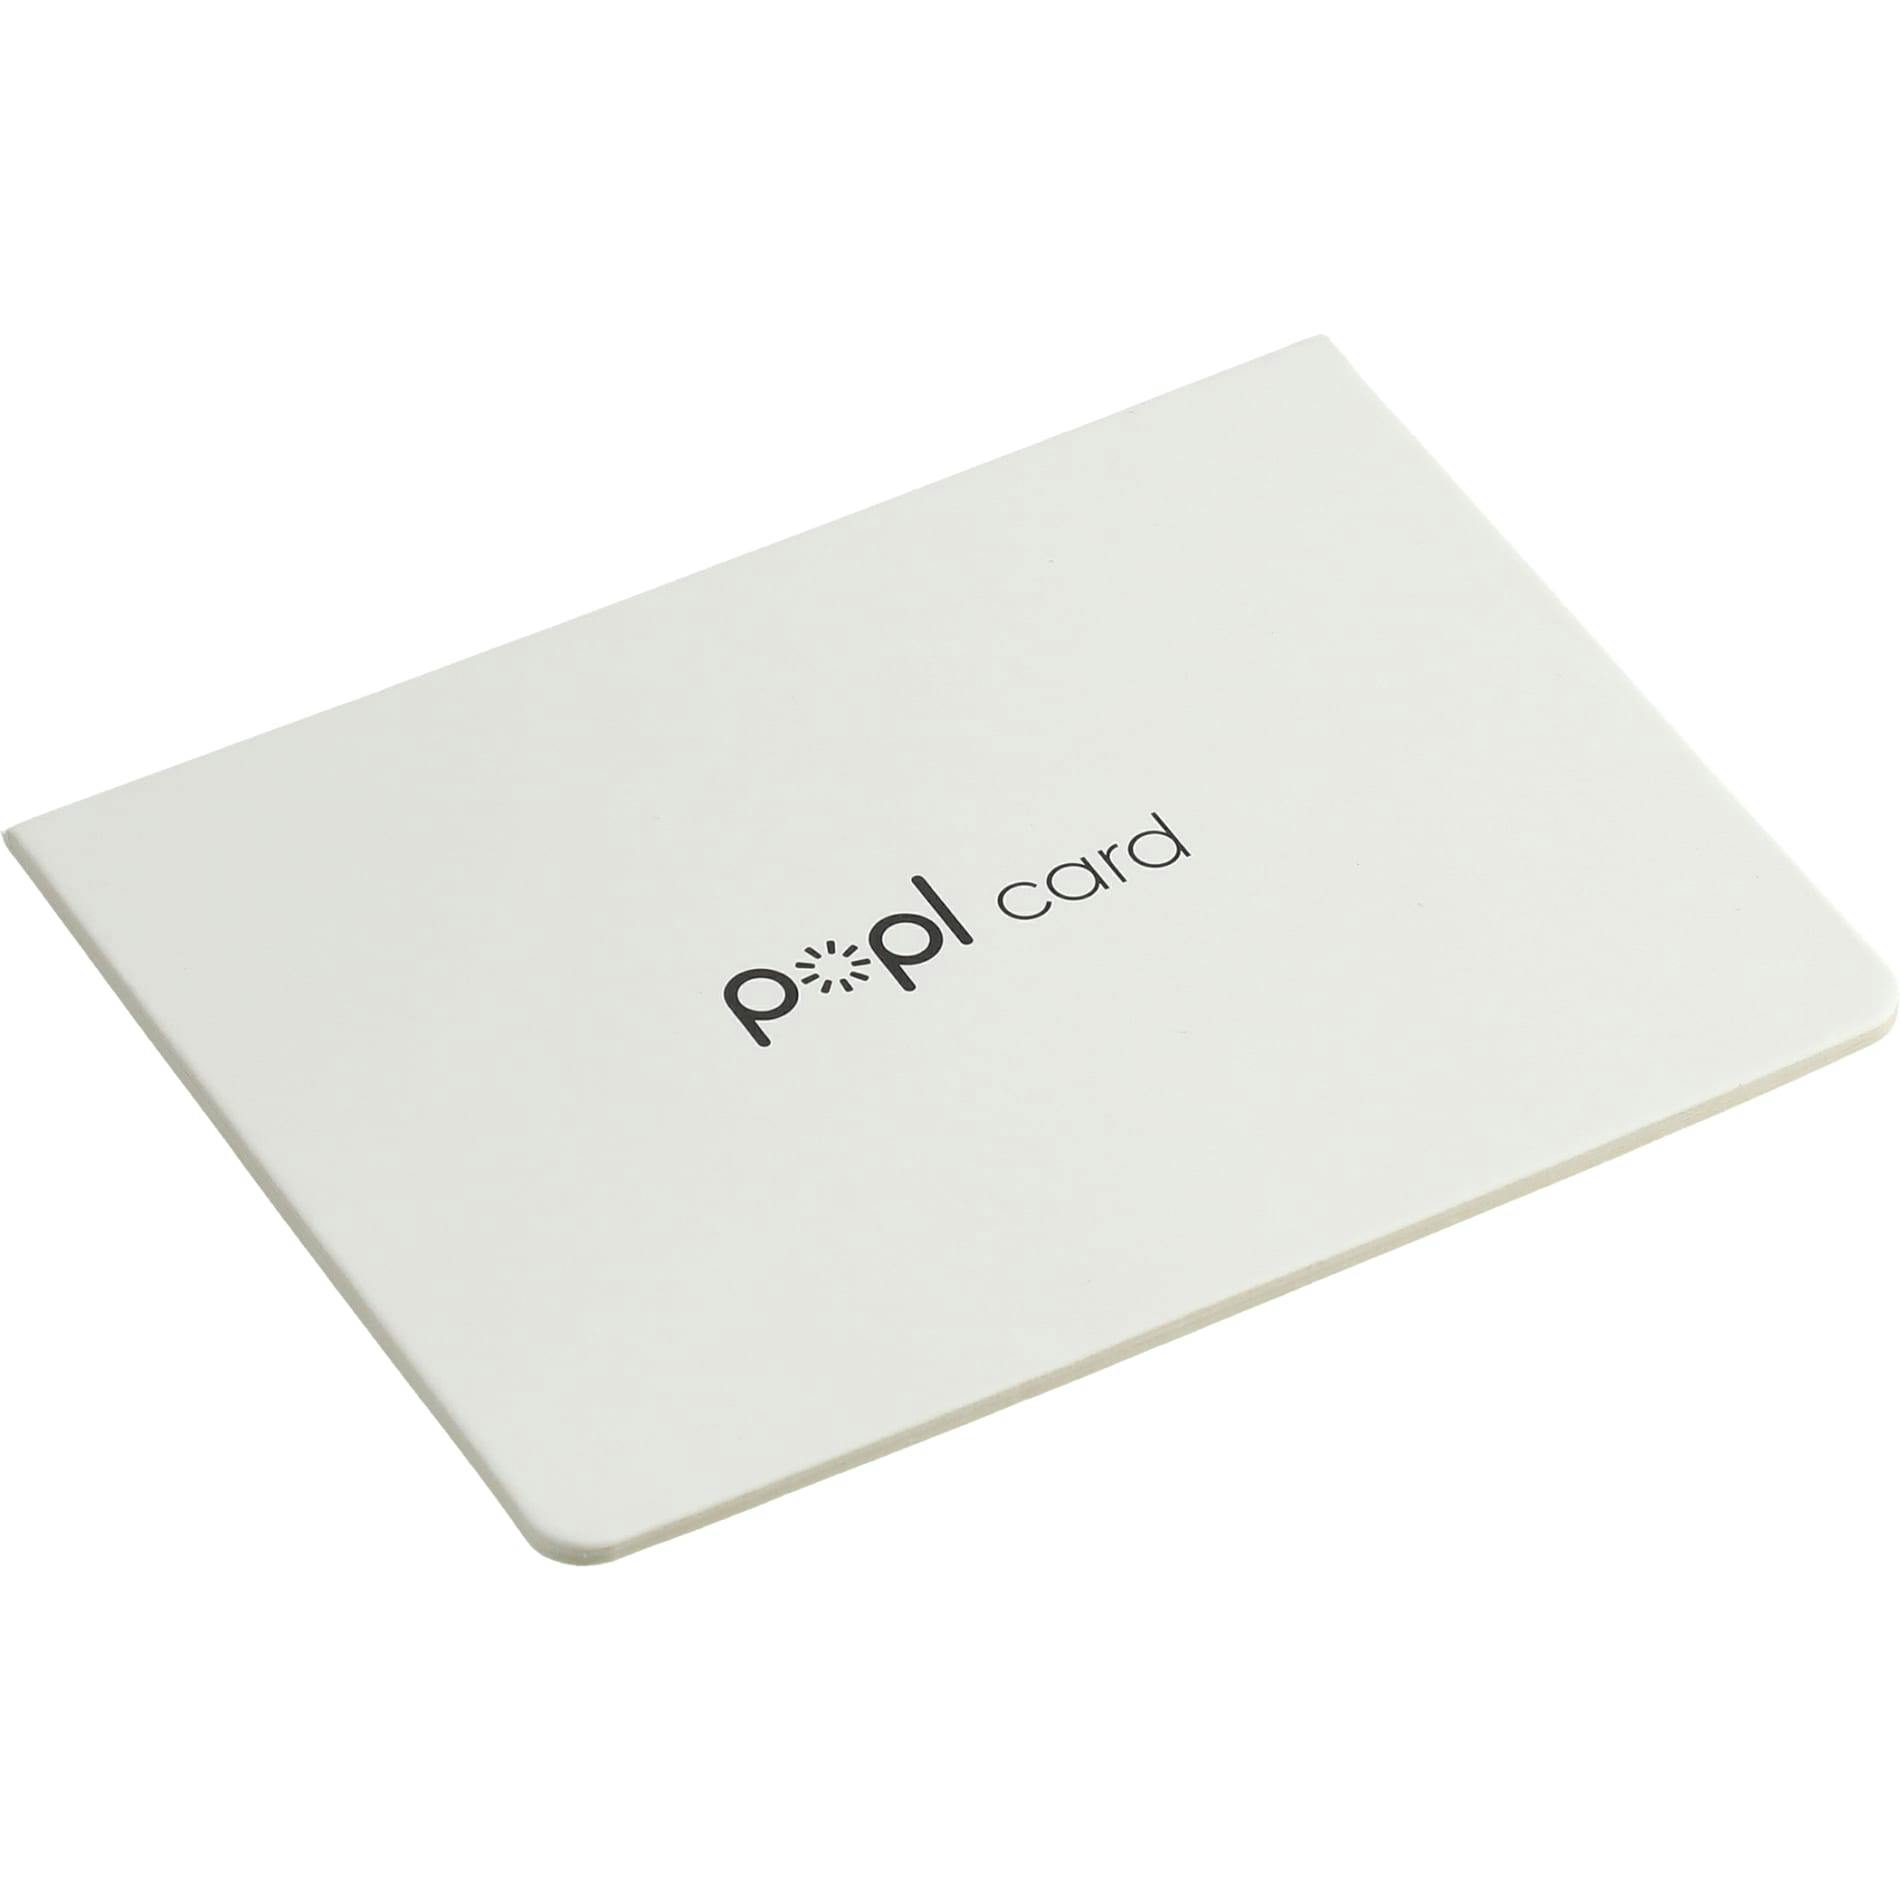 Popl Digital Business Card - additional Image 5